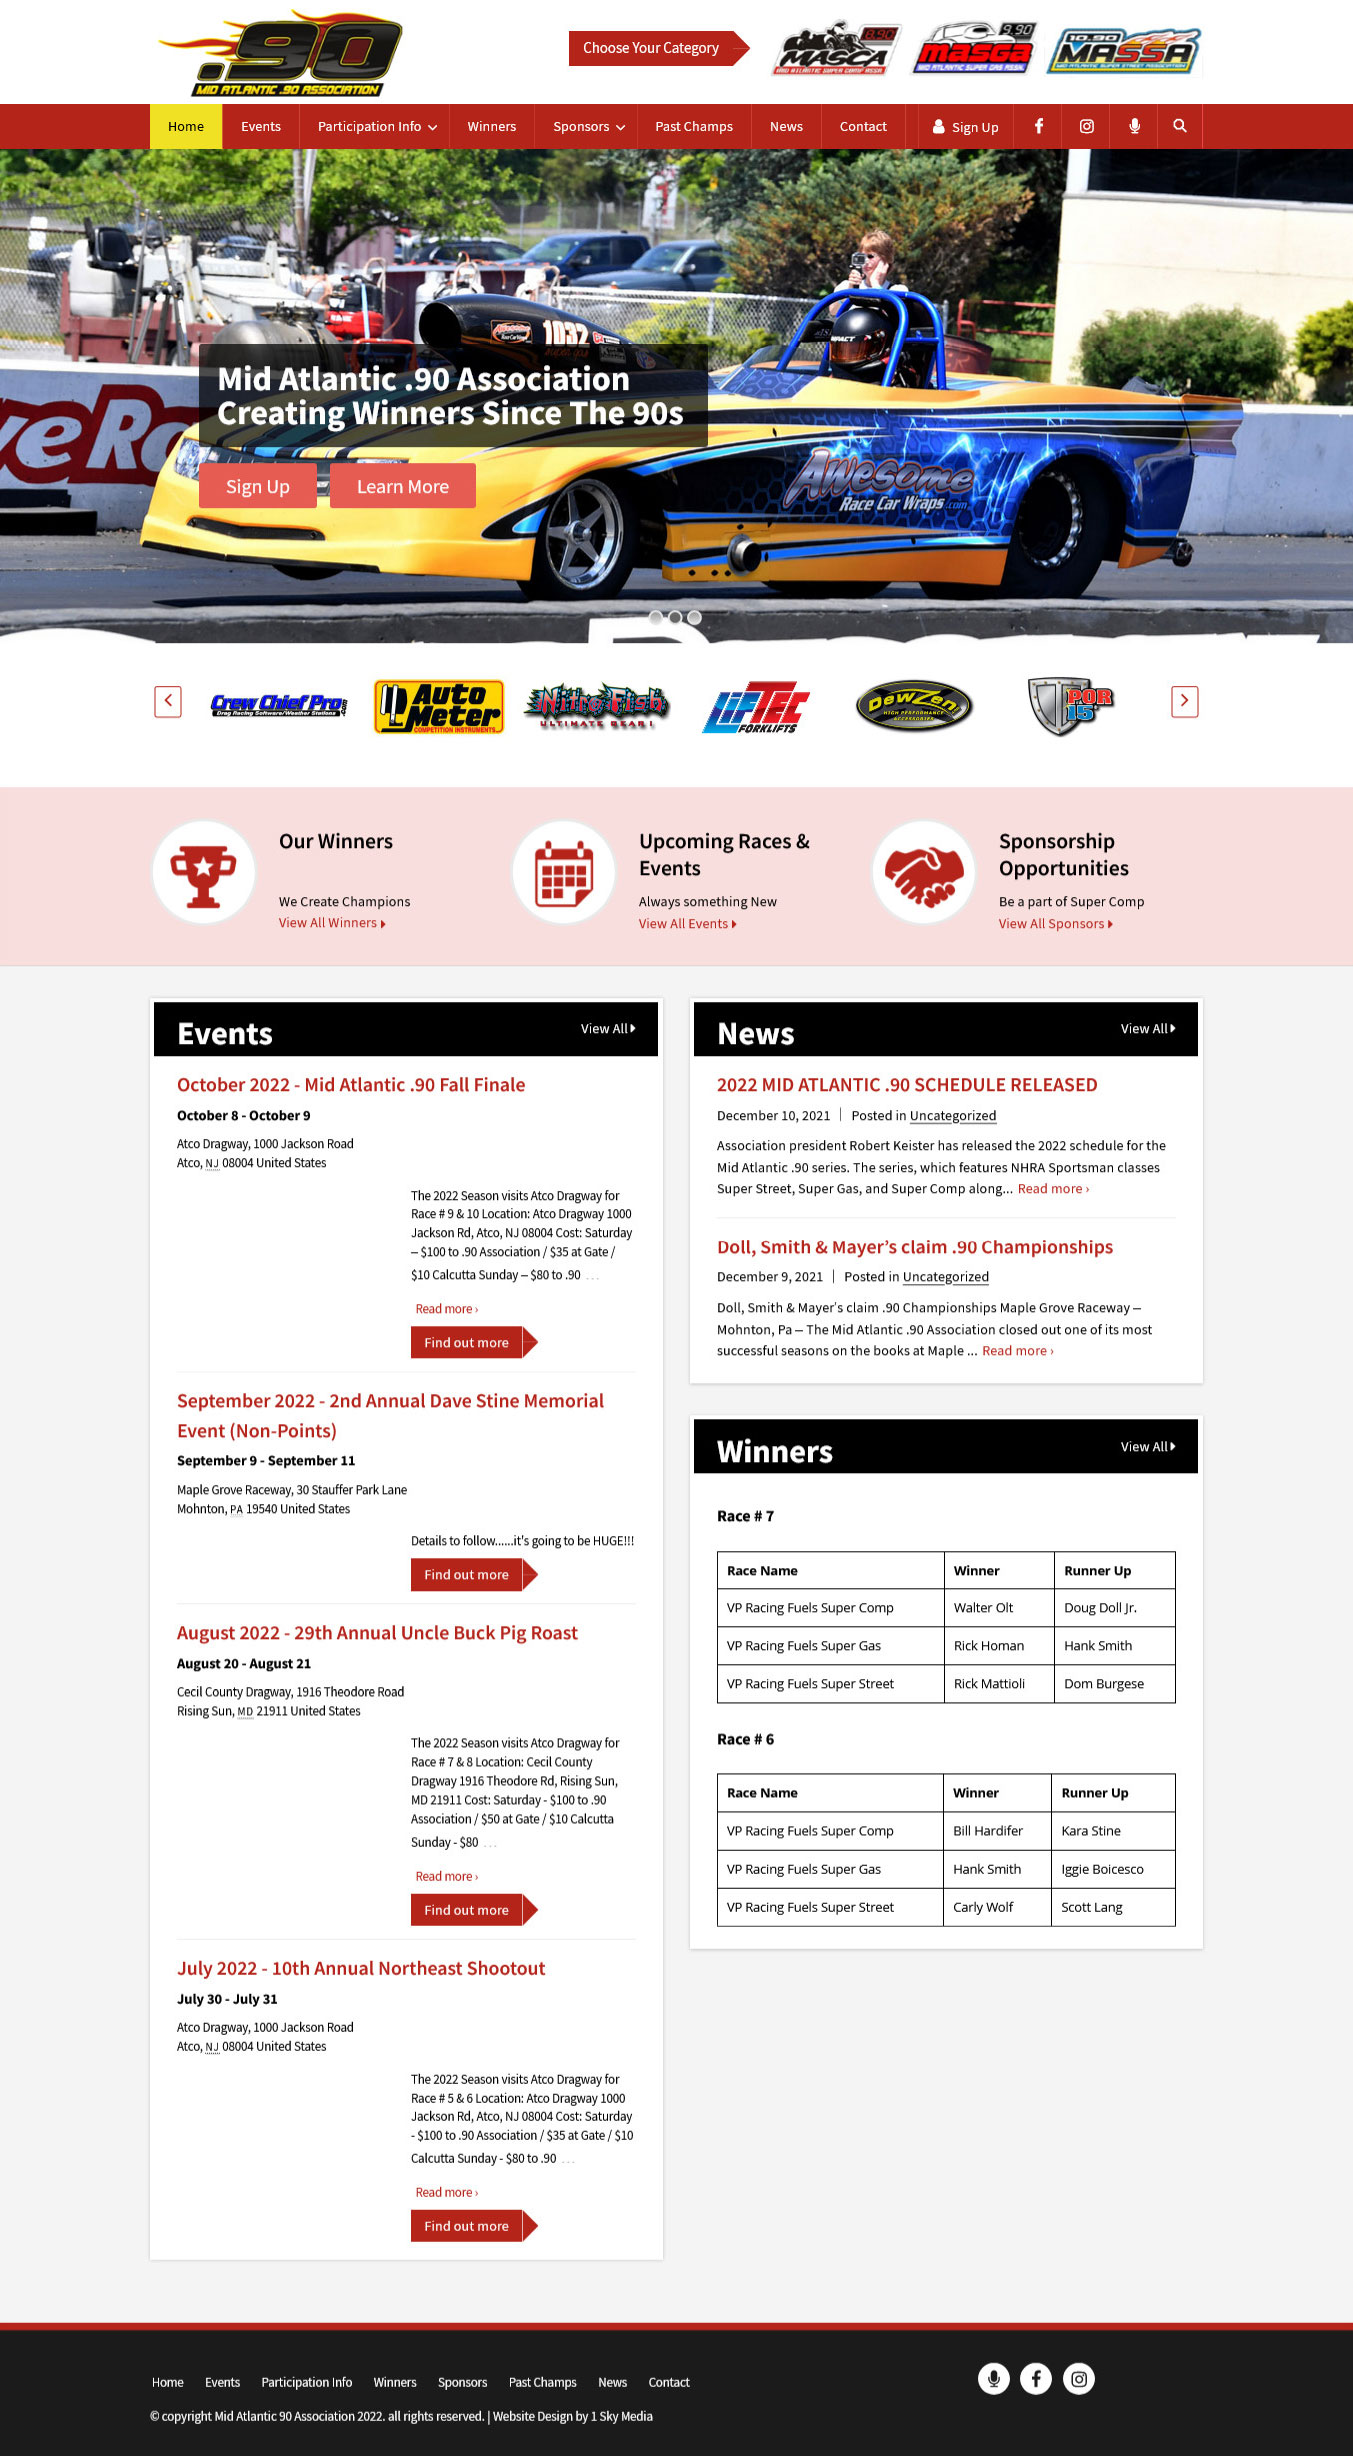 Mid Atlantic .90 drag racing association website design